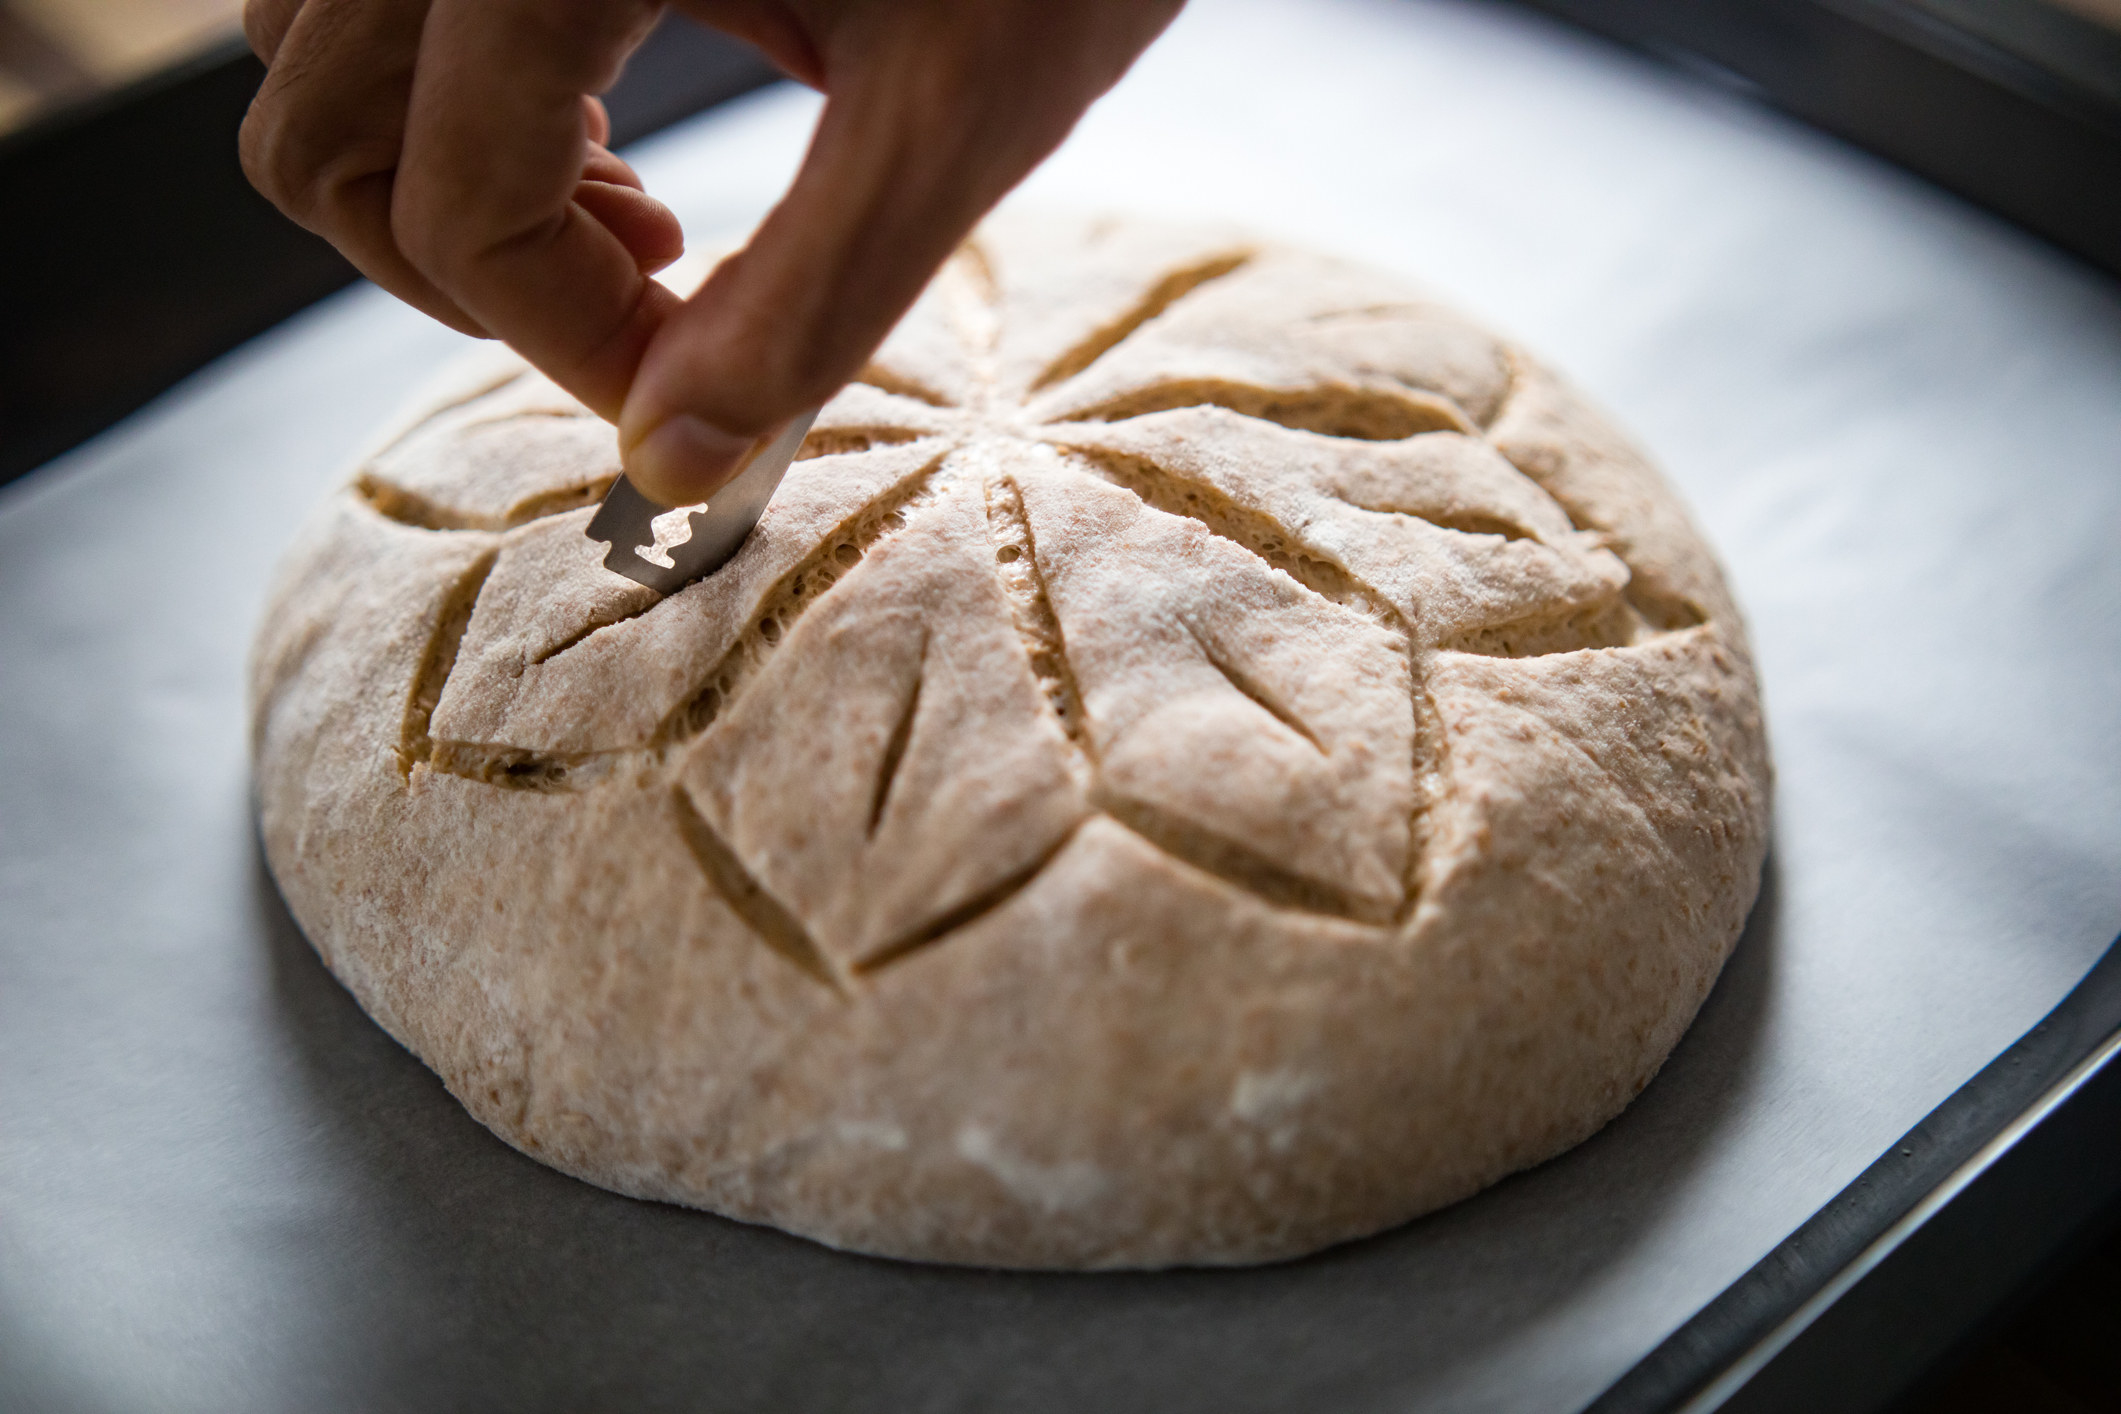 A hand scoring sourdough bread.